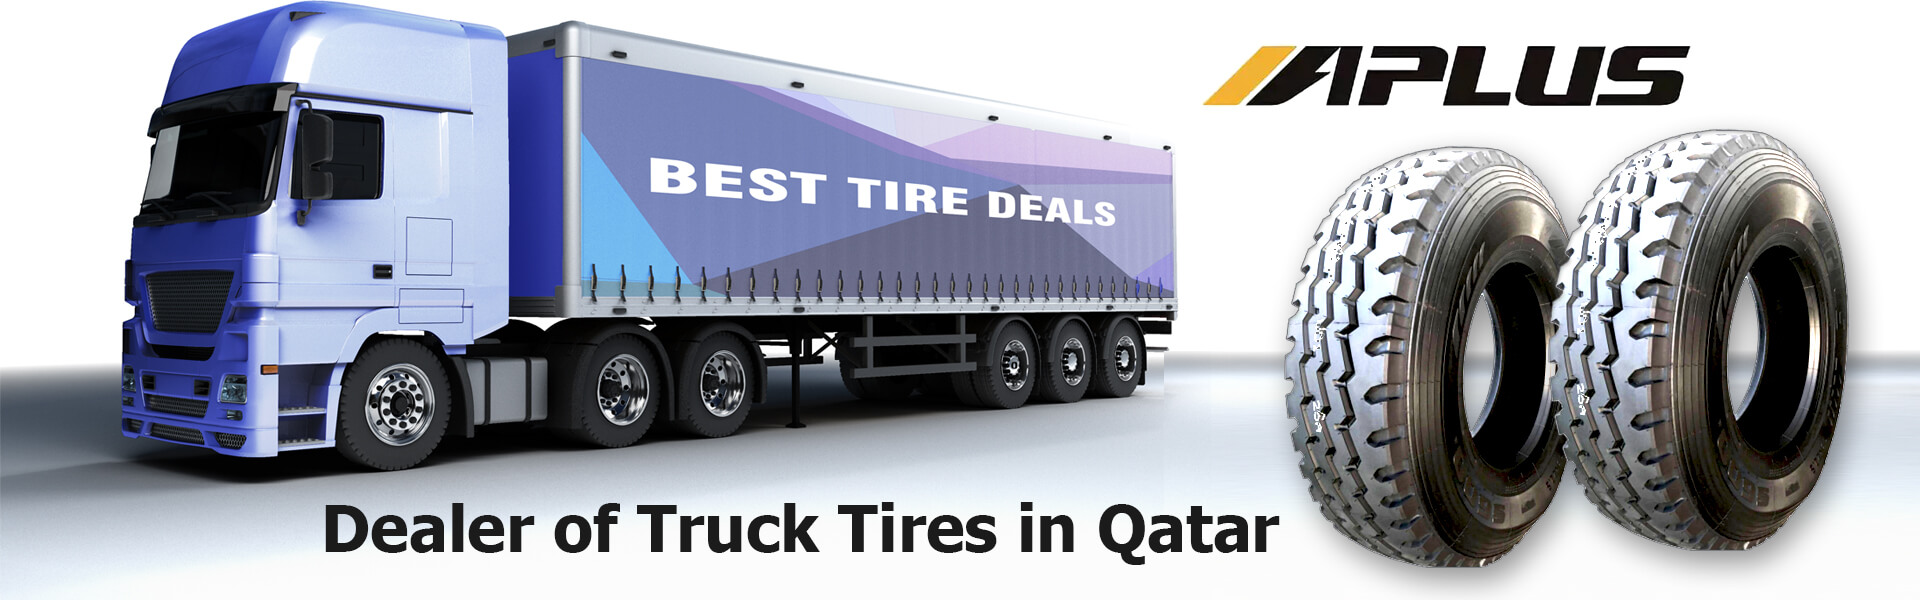 truck tires Qatar